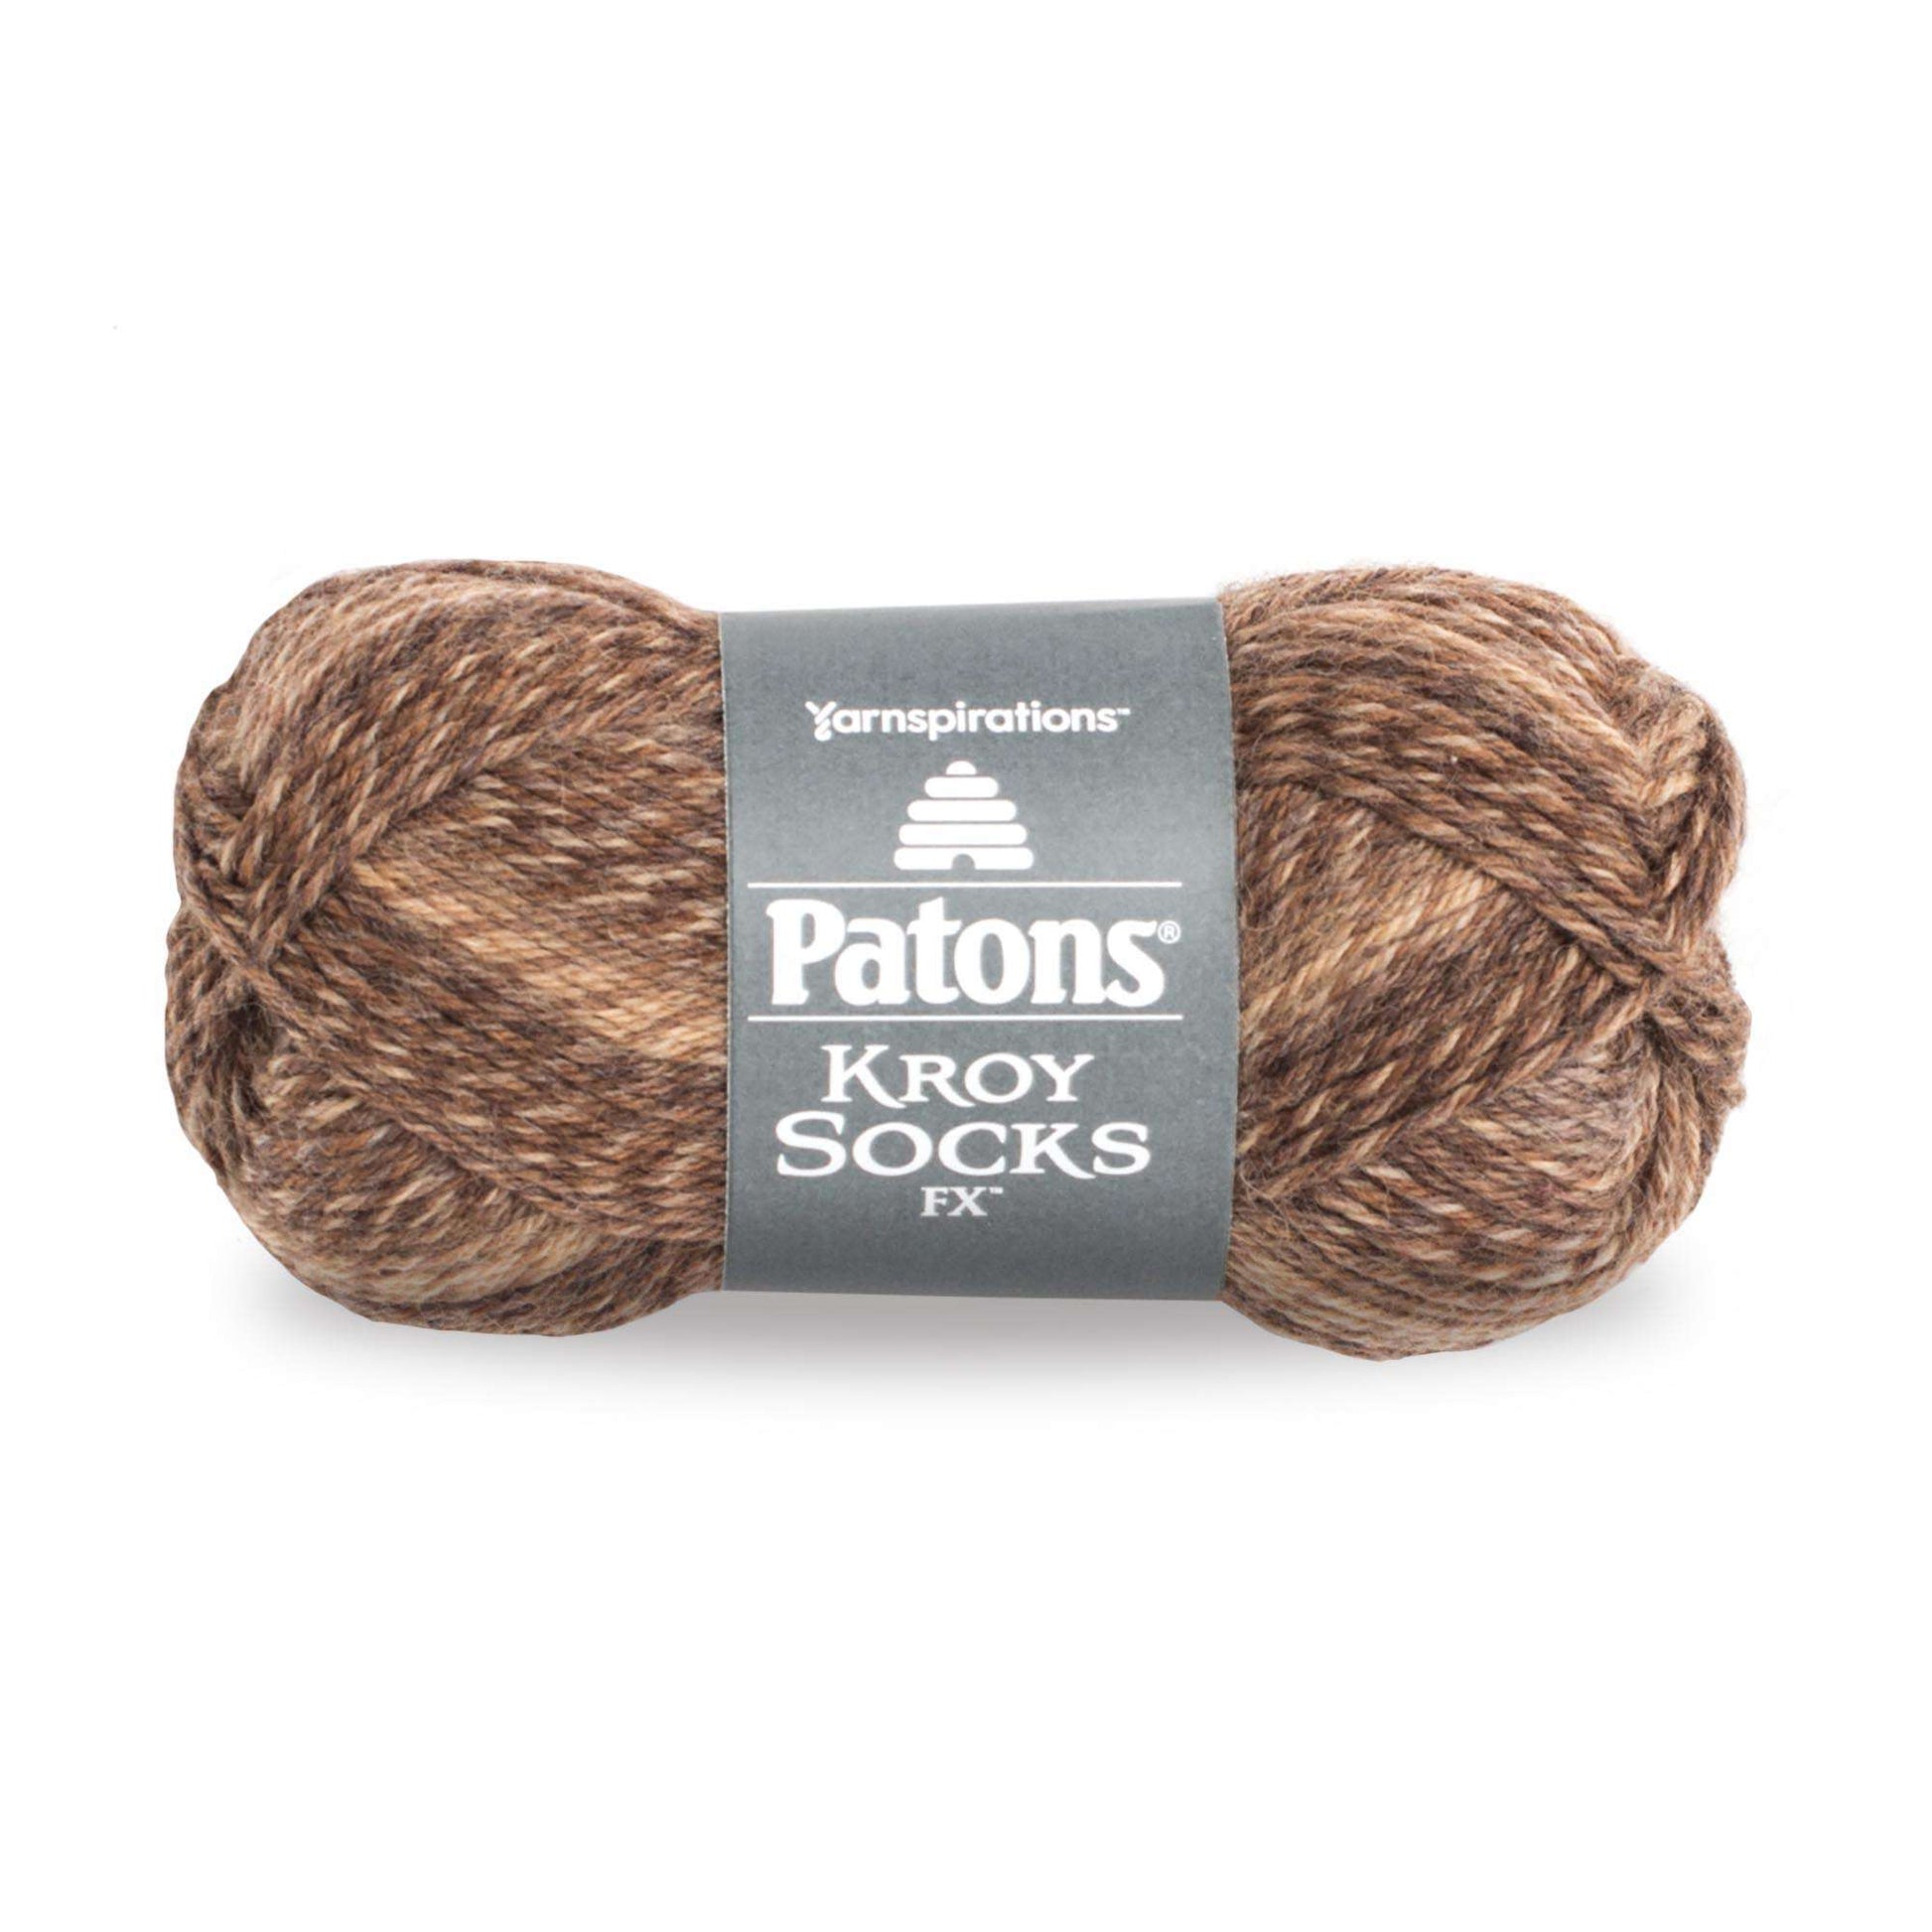 Patons Kroy Socks FX Yarn - Discontinued Shades